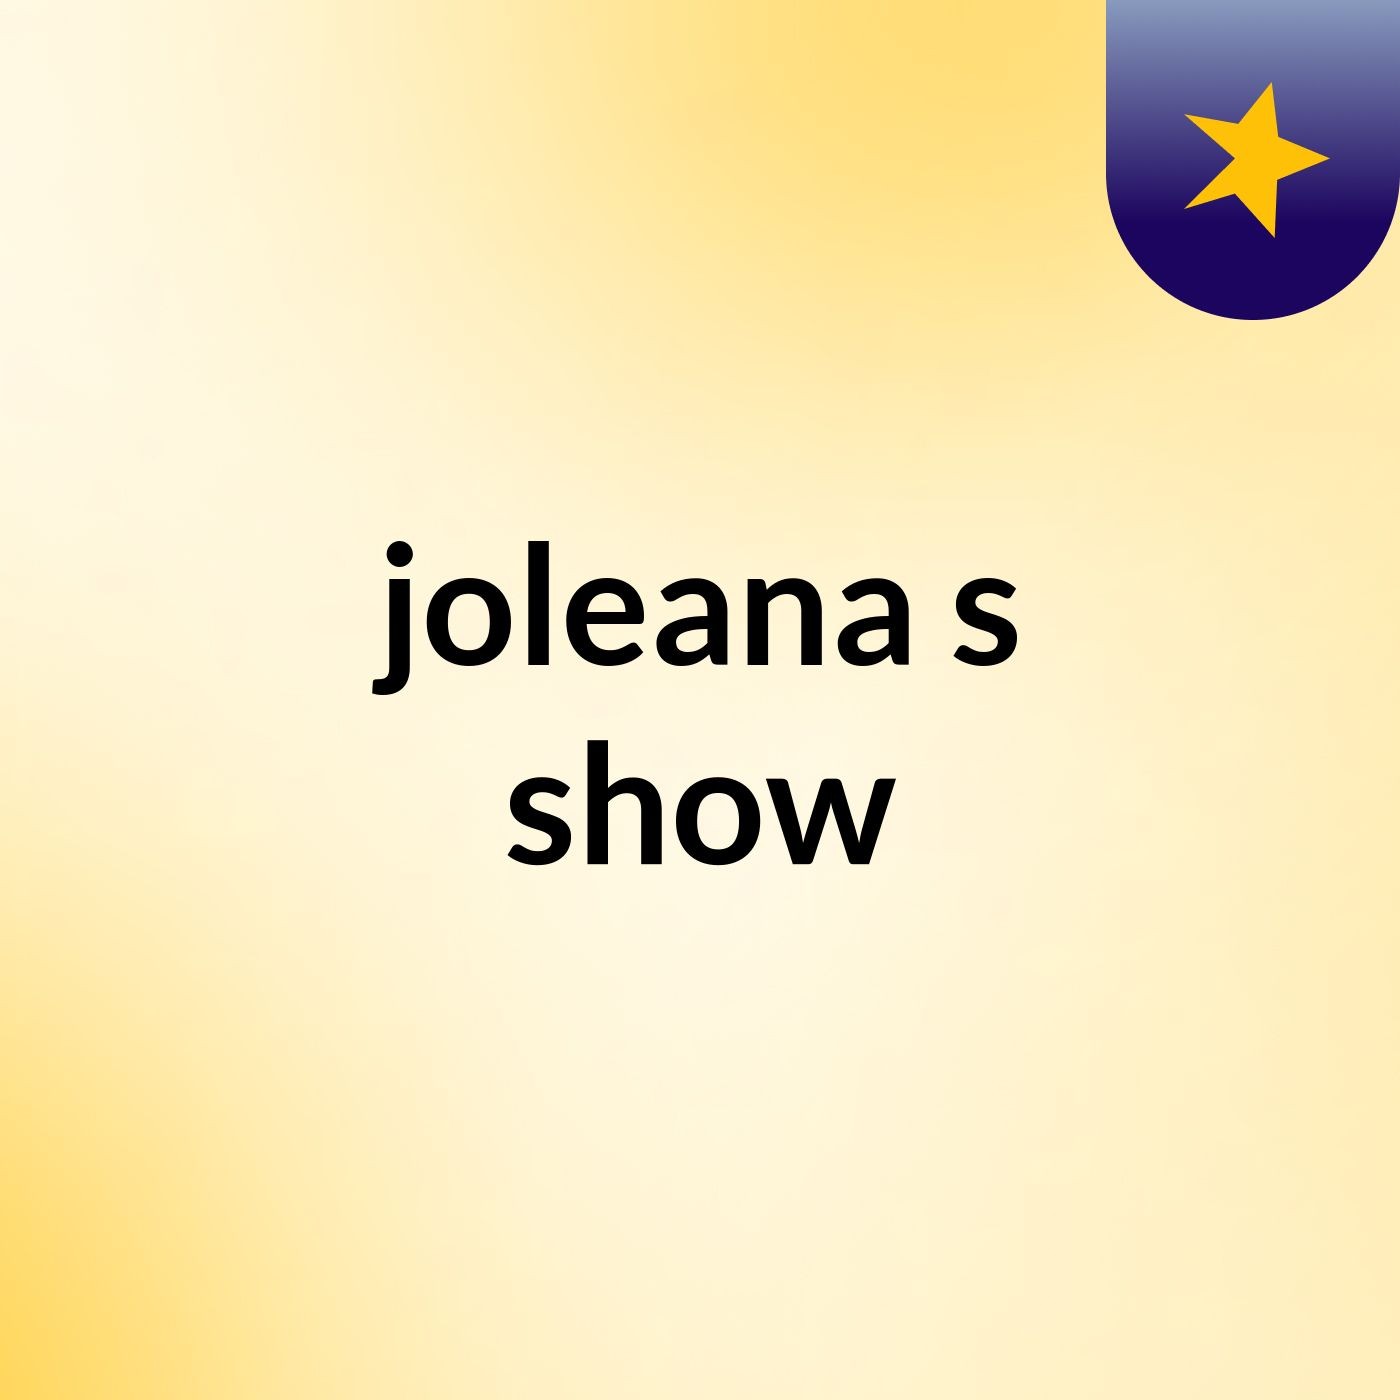 joleana's show